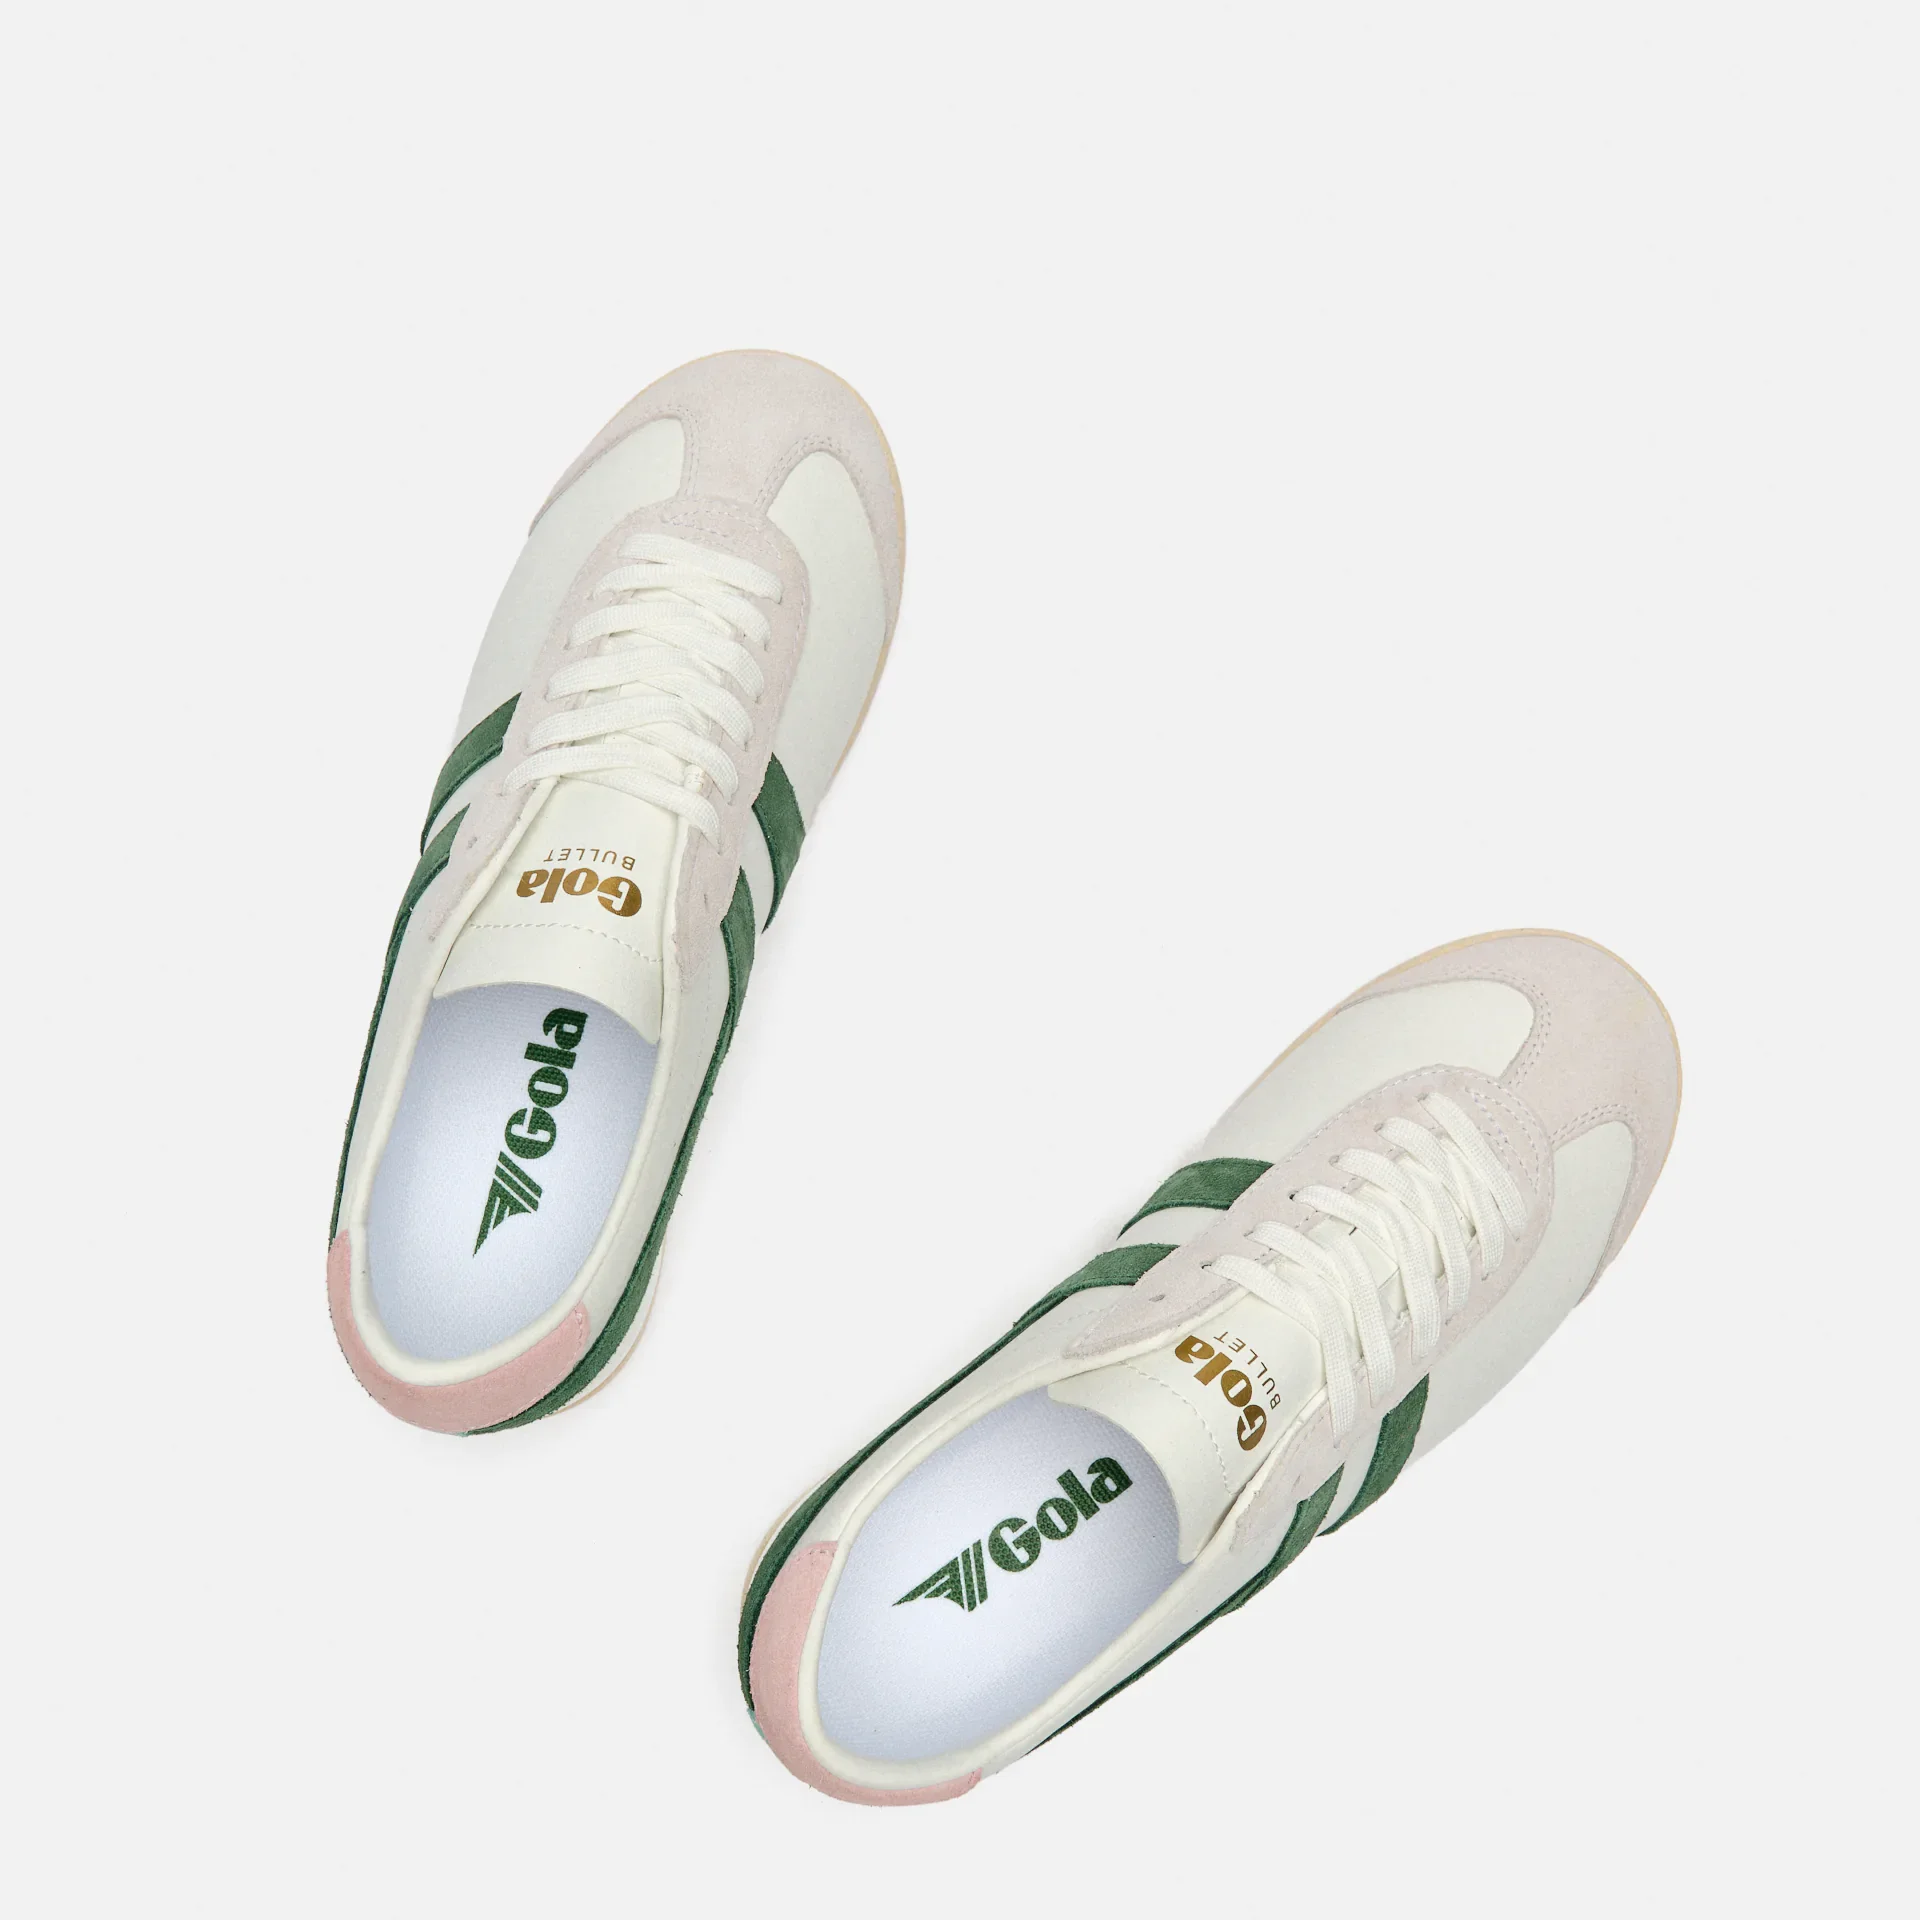 Gola Bullet Pure Sneaker White/Evergreen/Chalk Pink